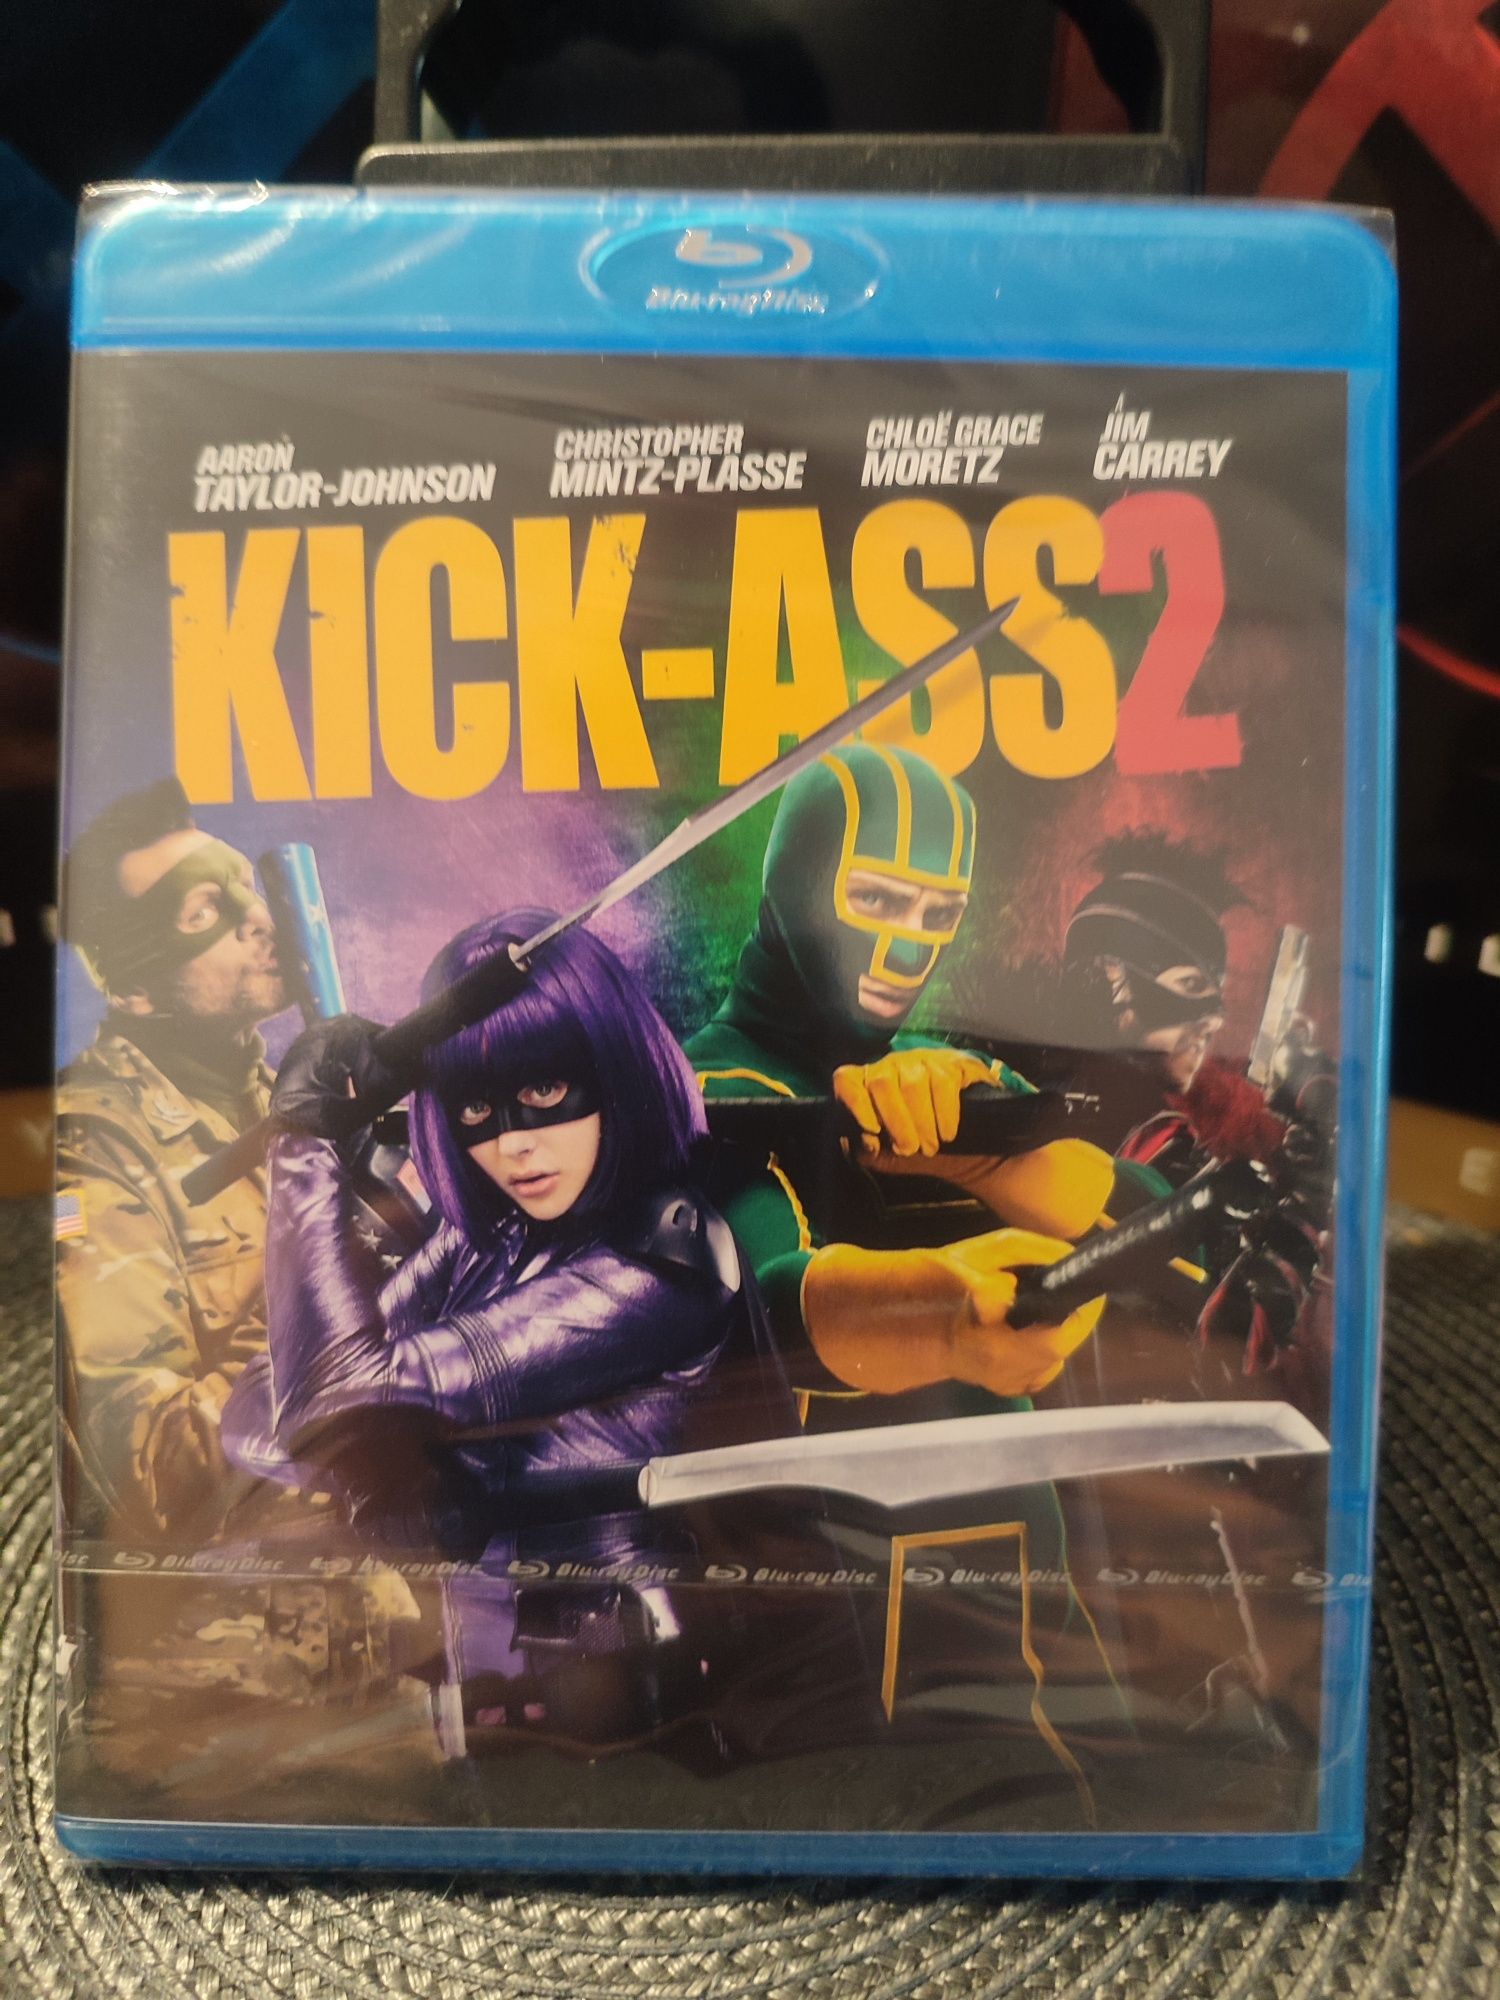 Film blu-ray Kick-ass 2 (Carrey, Moretz, Taylor-Johnson) Pl